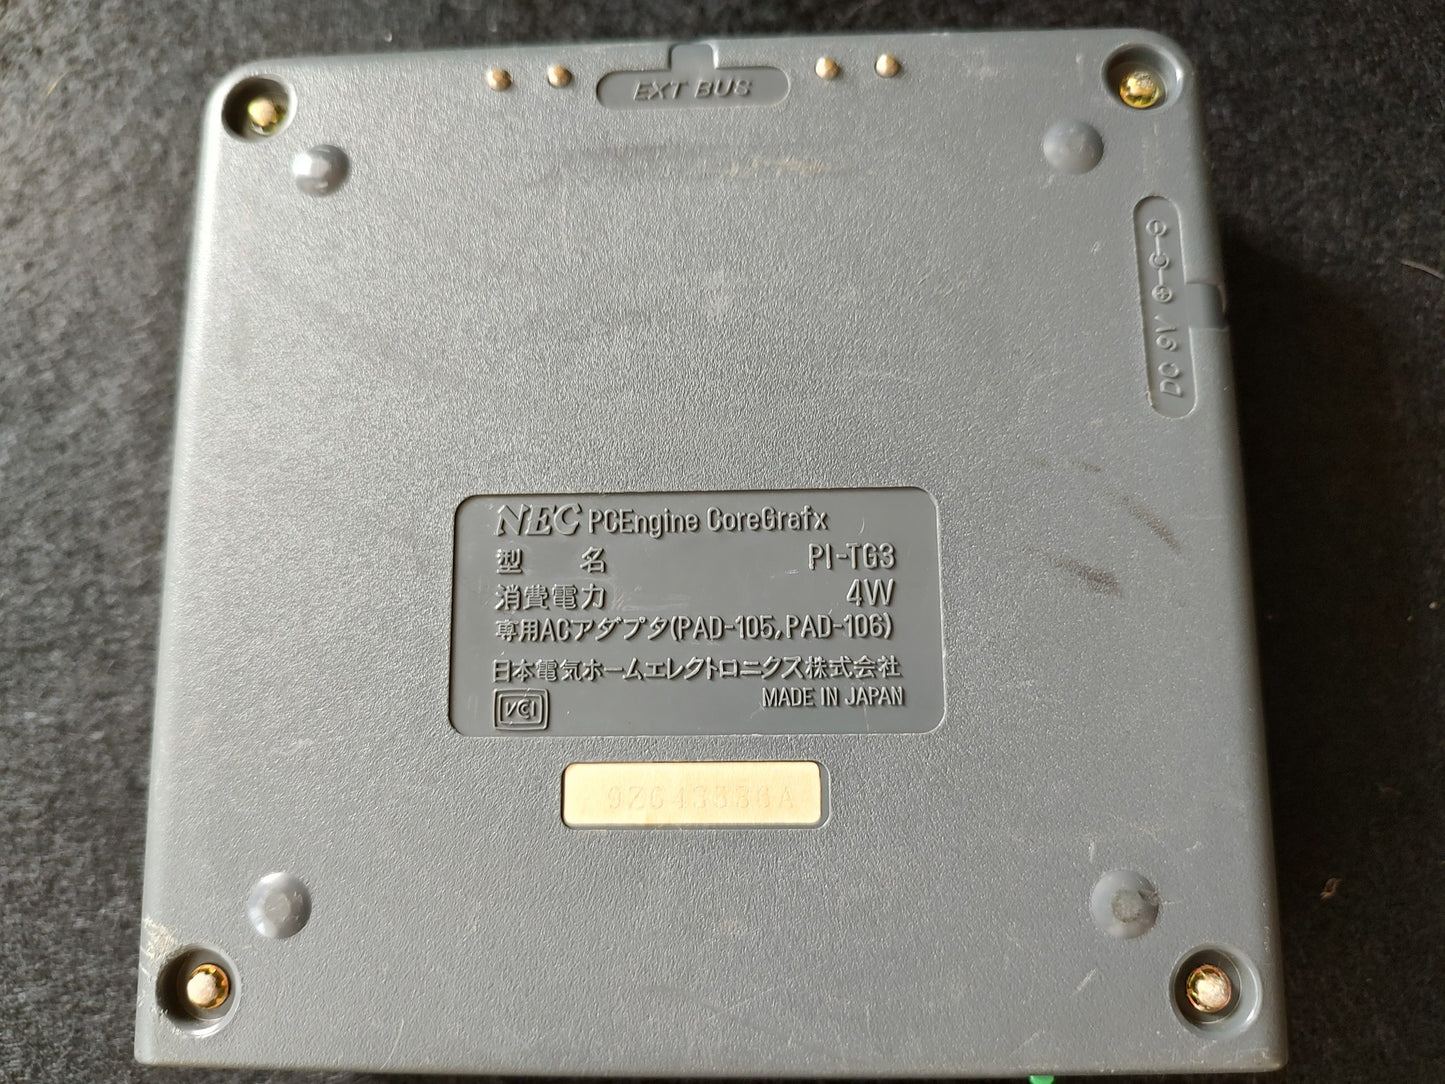 NEC PC Engine Coregrafx Console PI-TG3, Working -f0706-1